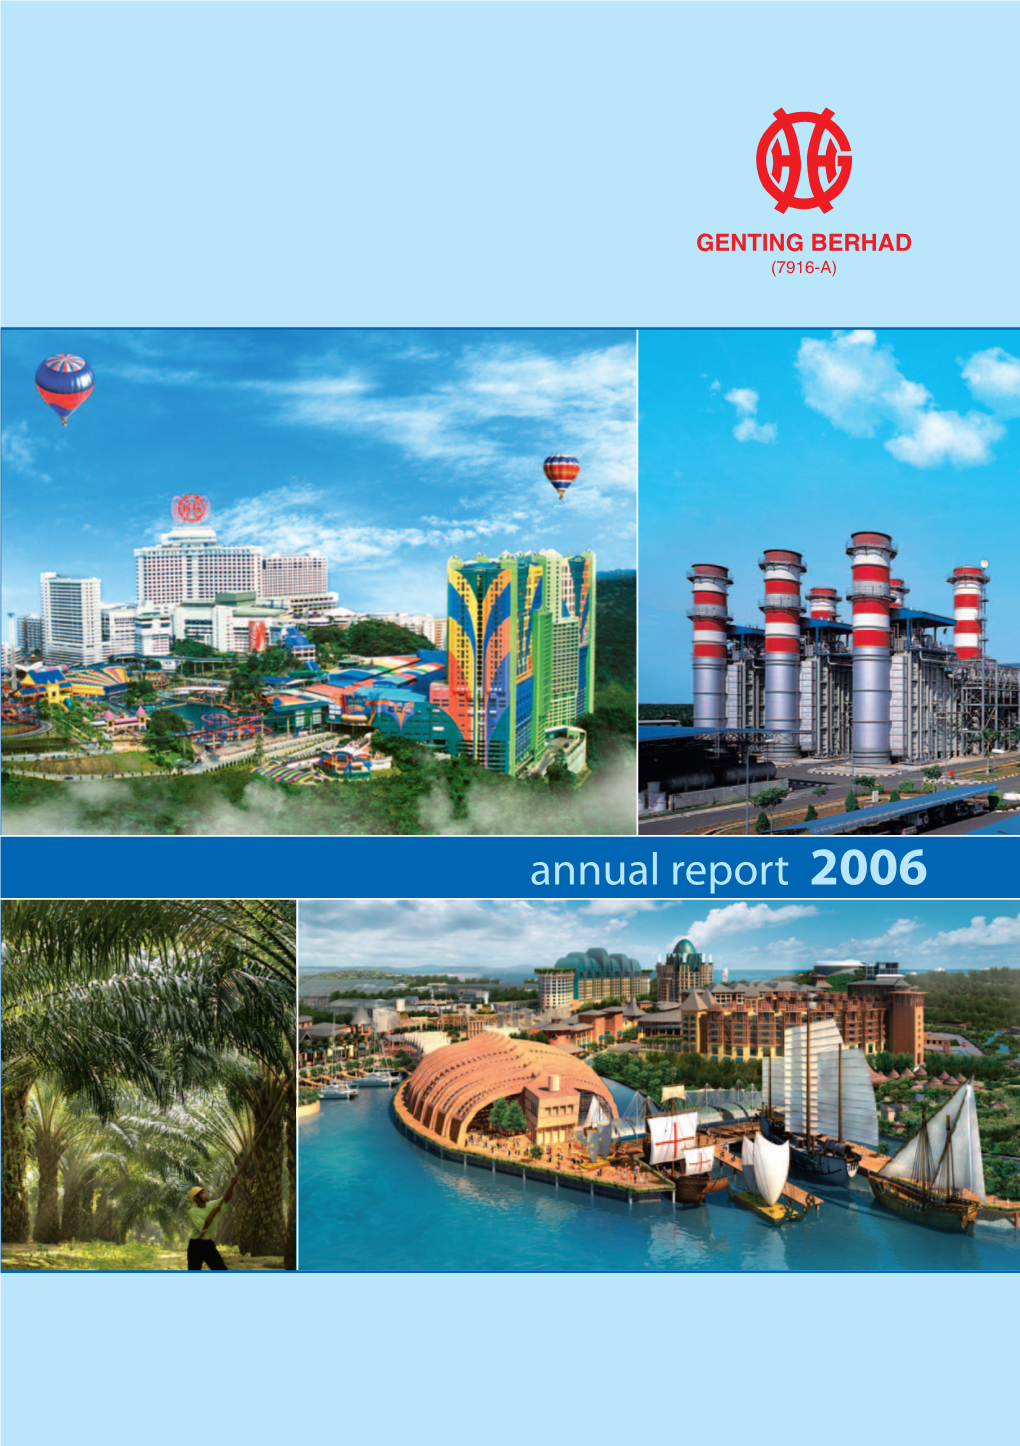 Annual Report 2006 